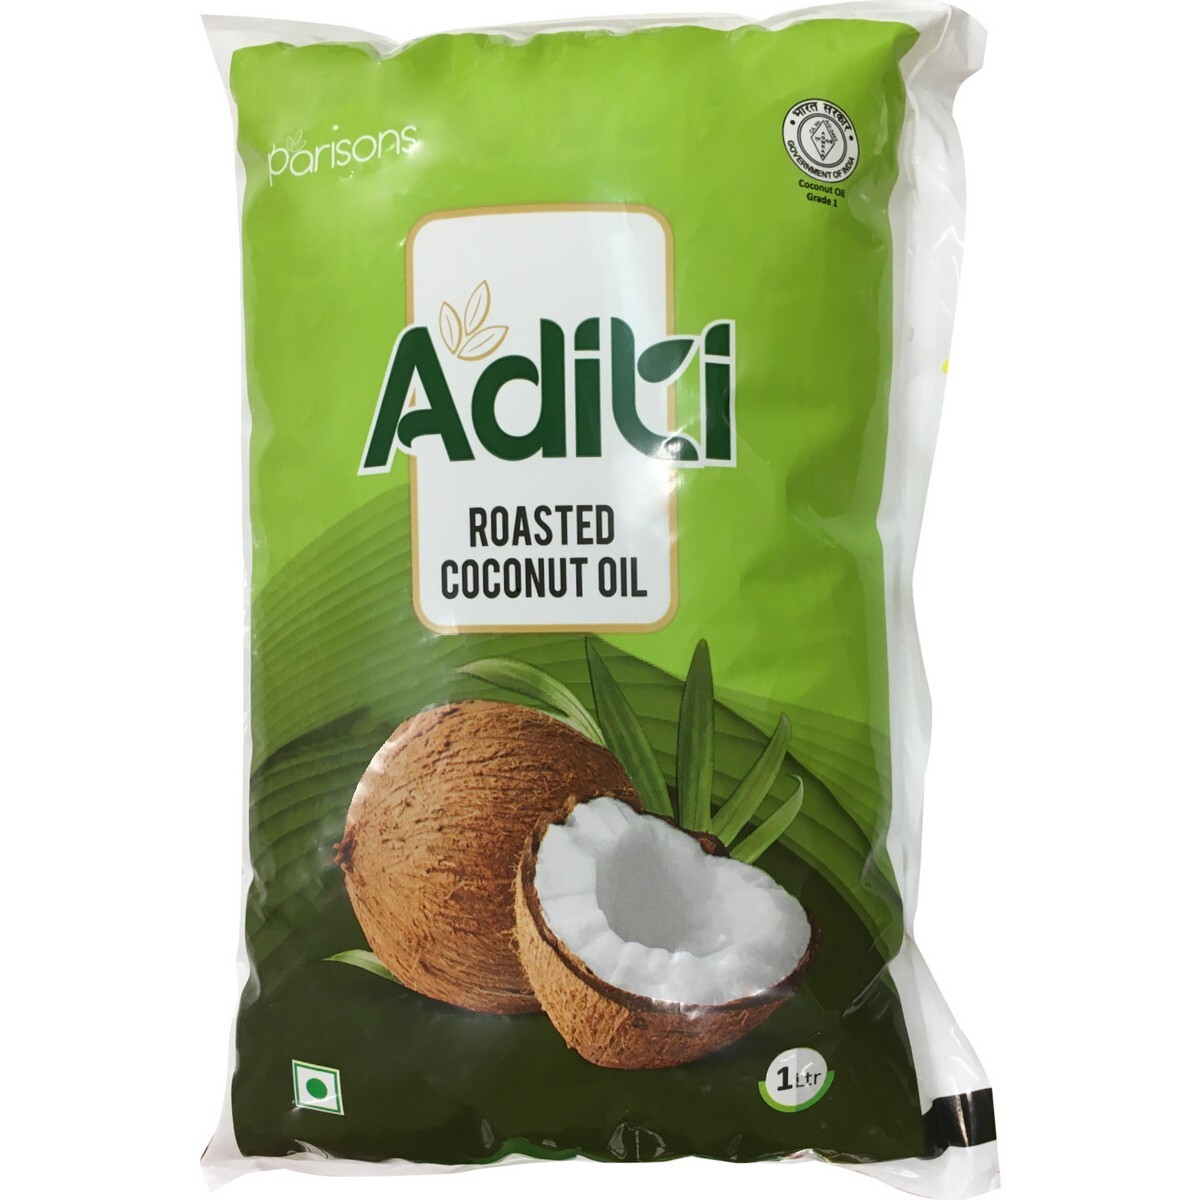 Aditi Roasted Coconut Oil 1 Litre